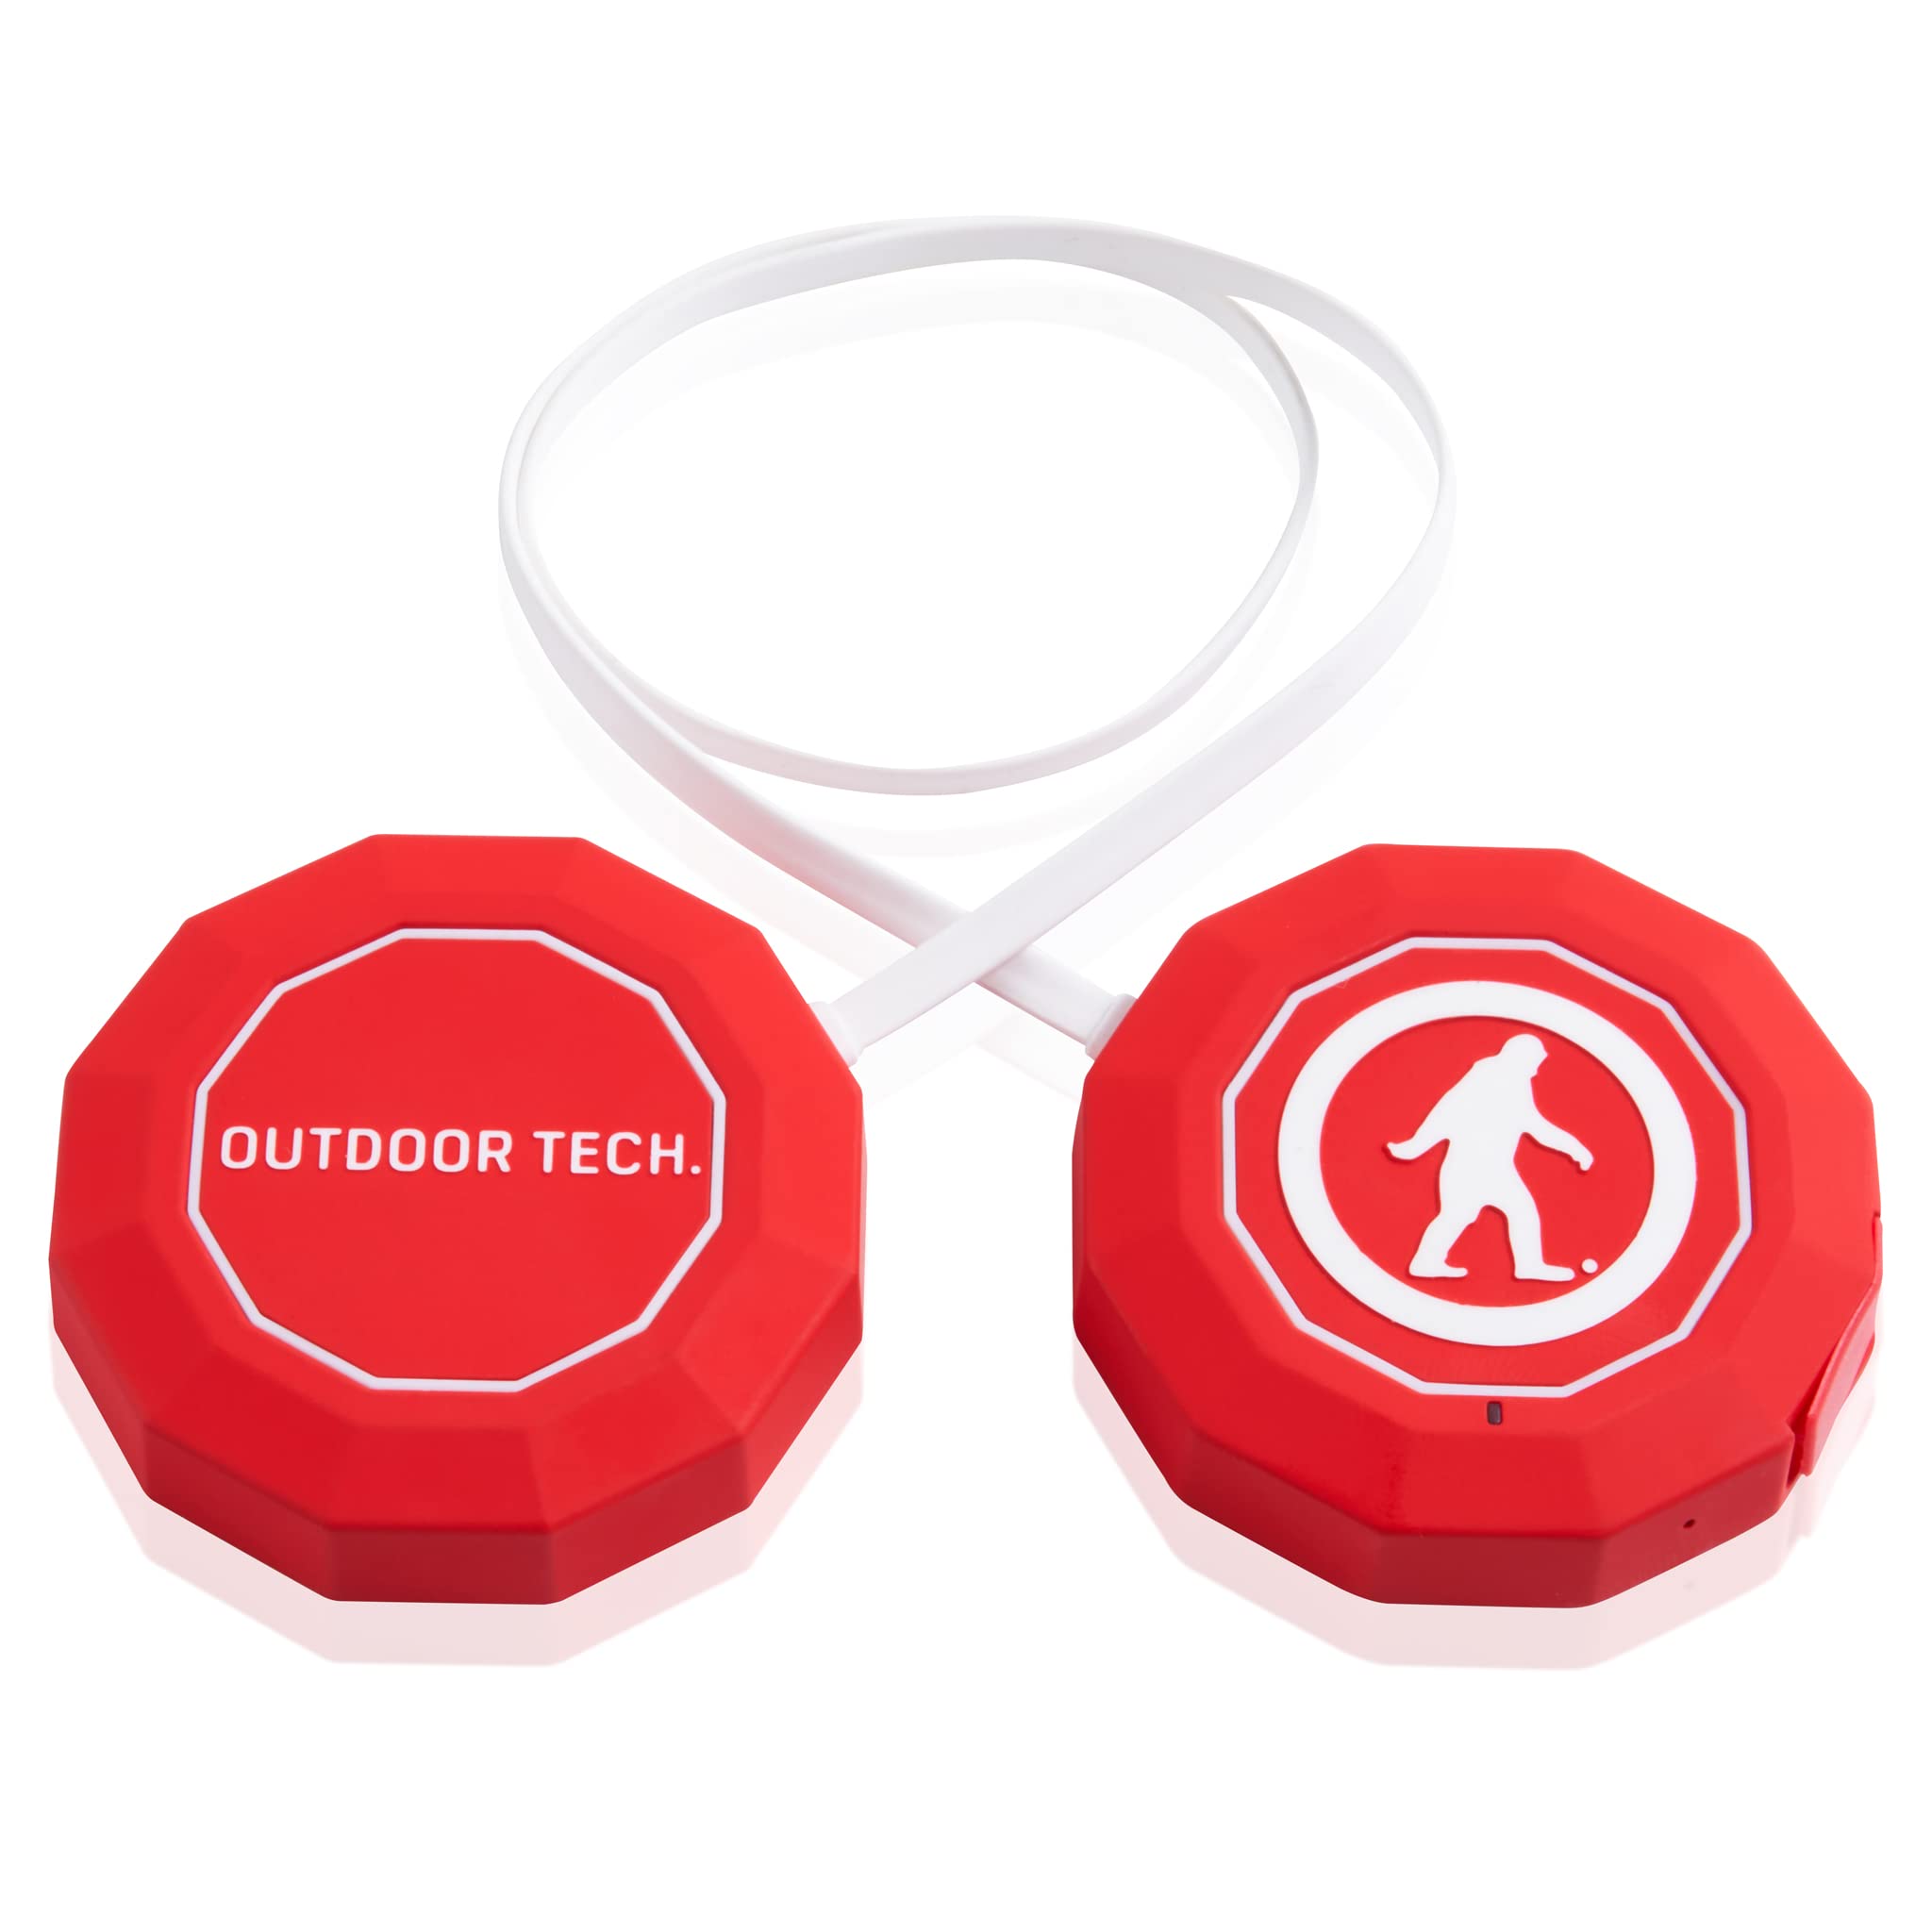  Outdoor Tech 대부분의 스노우 헬멧과 호환되는 스노우 보드 헬멧 및 스키 헬멧을 위한 무선 헬멧 오디오 및 음악용 Bluetooth가 장착된 Chips 3.0 스노우 헬멧...